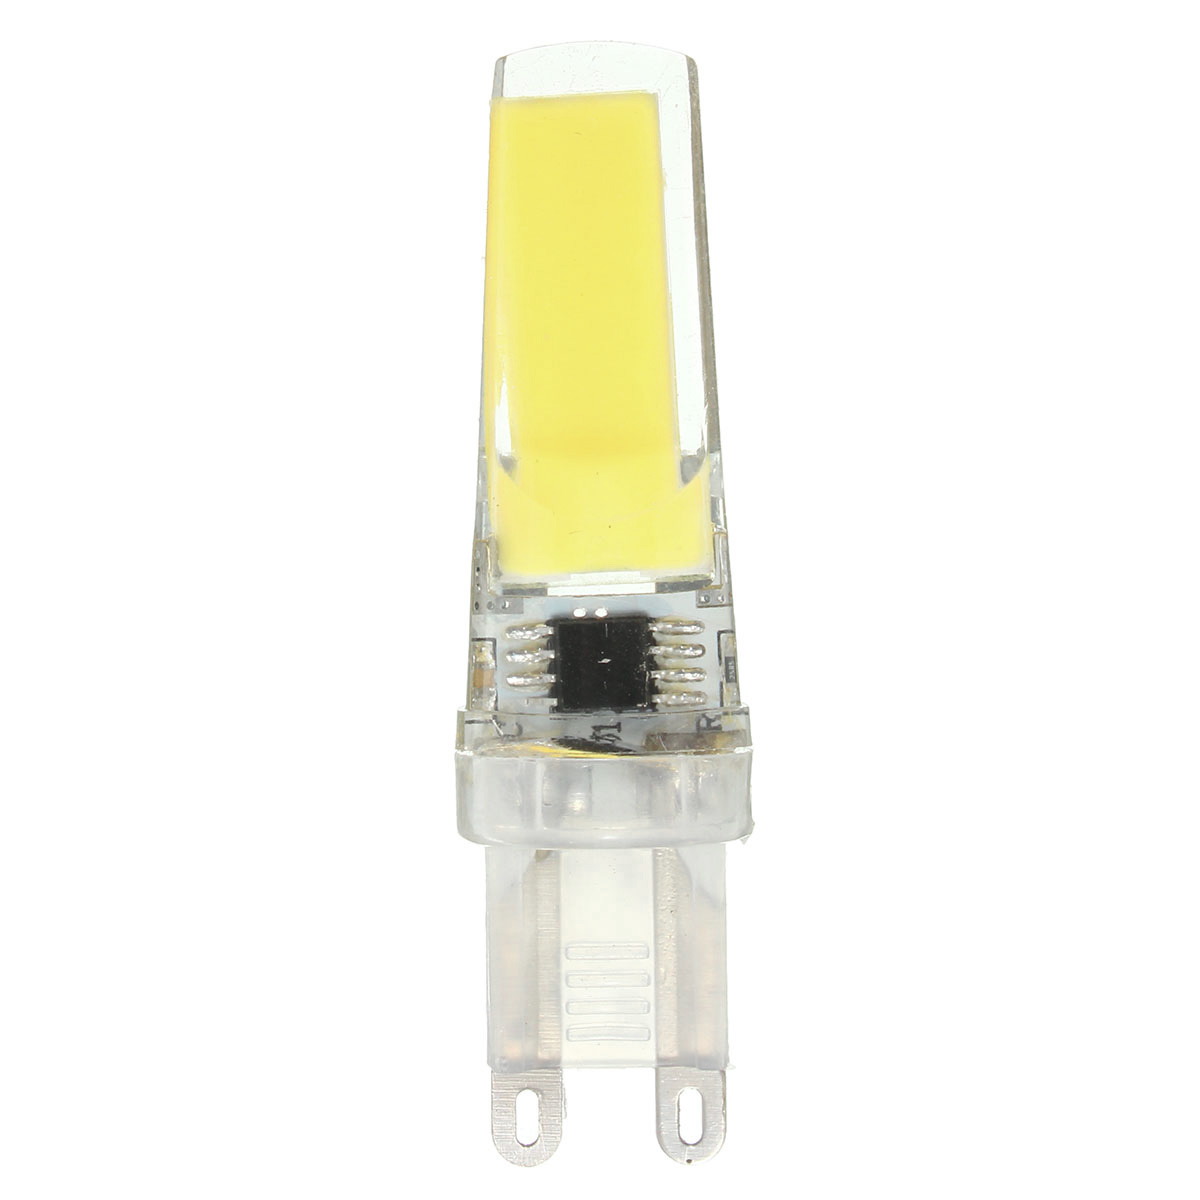 Dimmable-G9-LED-3W-Pure-White-Warm-White-COB-LED-Light-Lamp-Bulb-AC220V-1062193-8